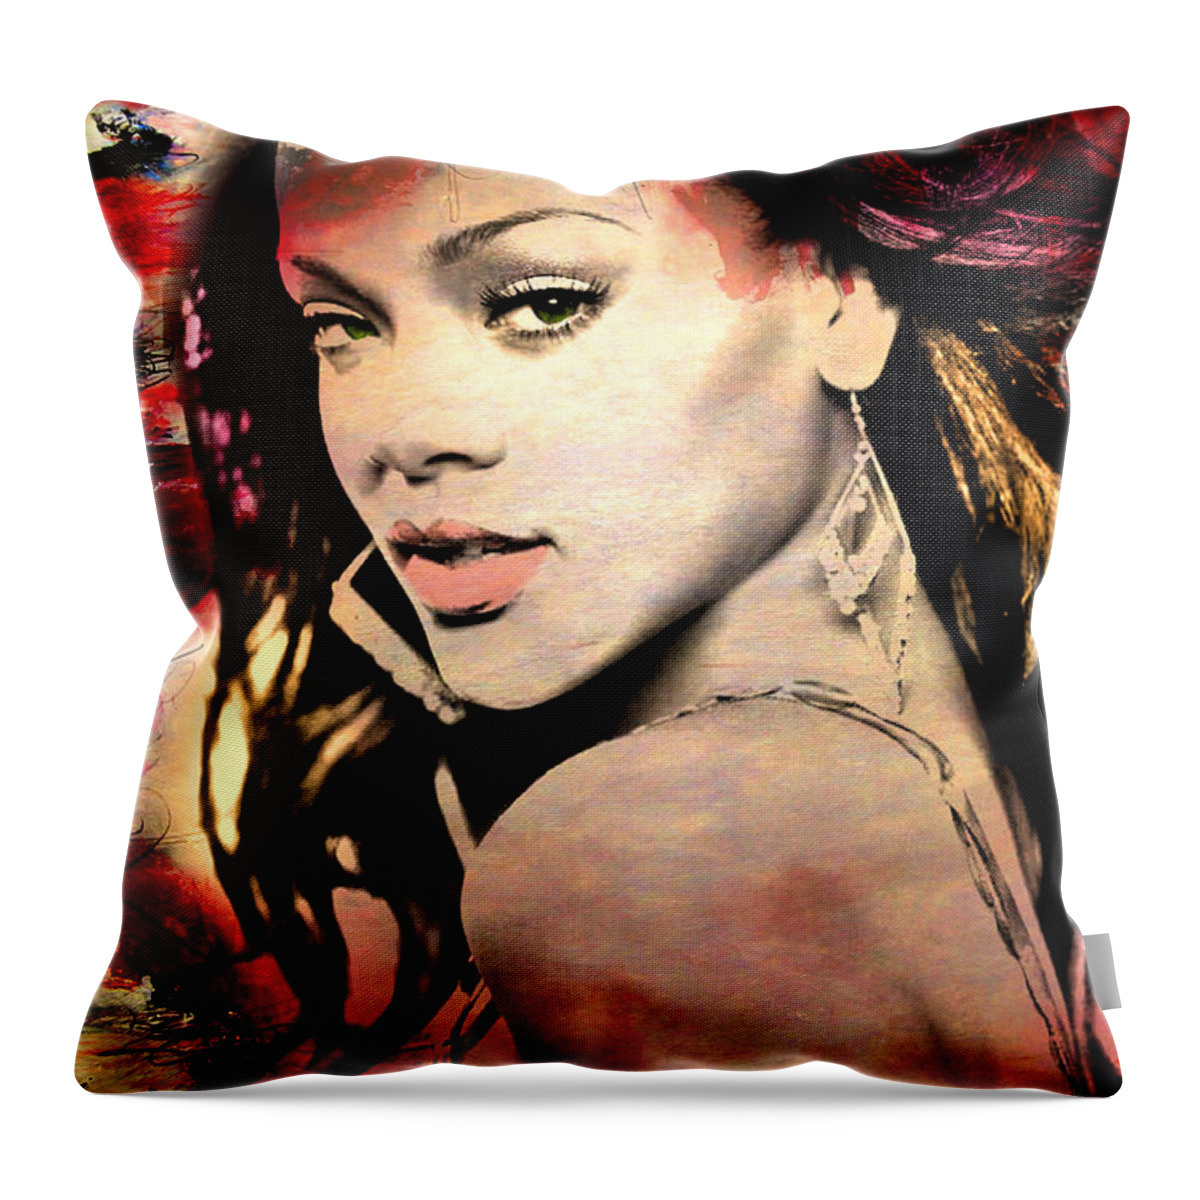 Rihanna Throw Pillow featuring the painting Rihanna by Mark Ashkenazi